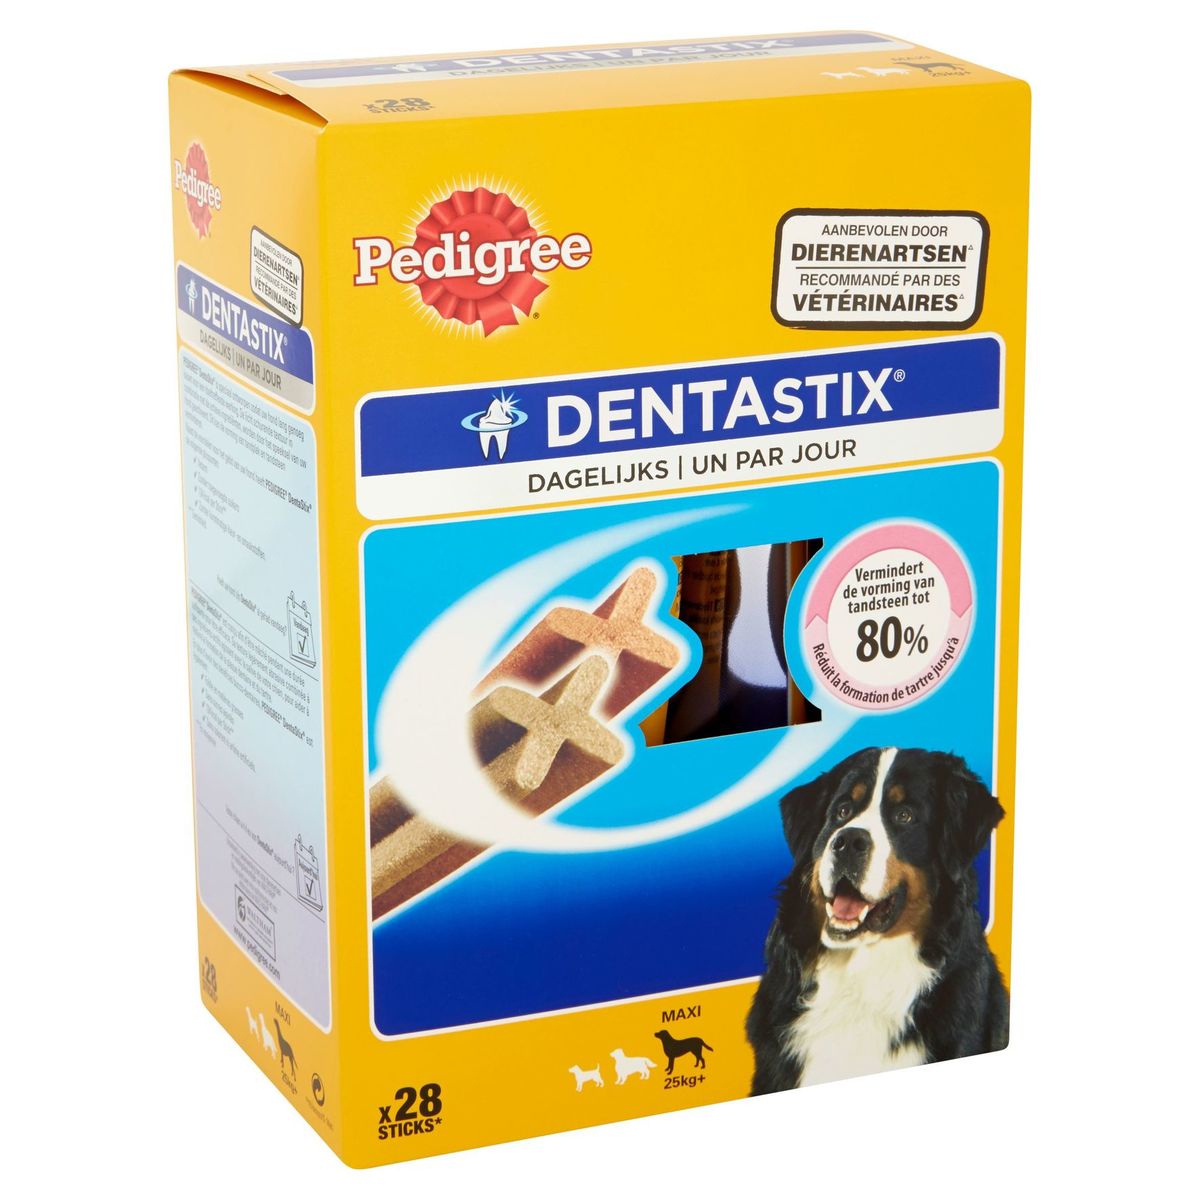 Pedigree DentaStix Snack Chien Maxi 25 kg+, 28 Sticks, 1080 g